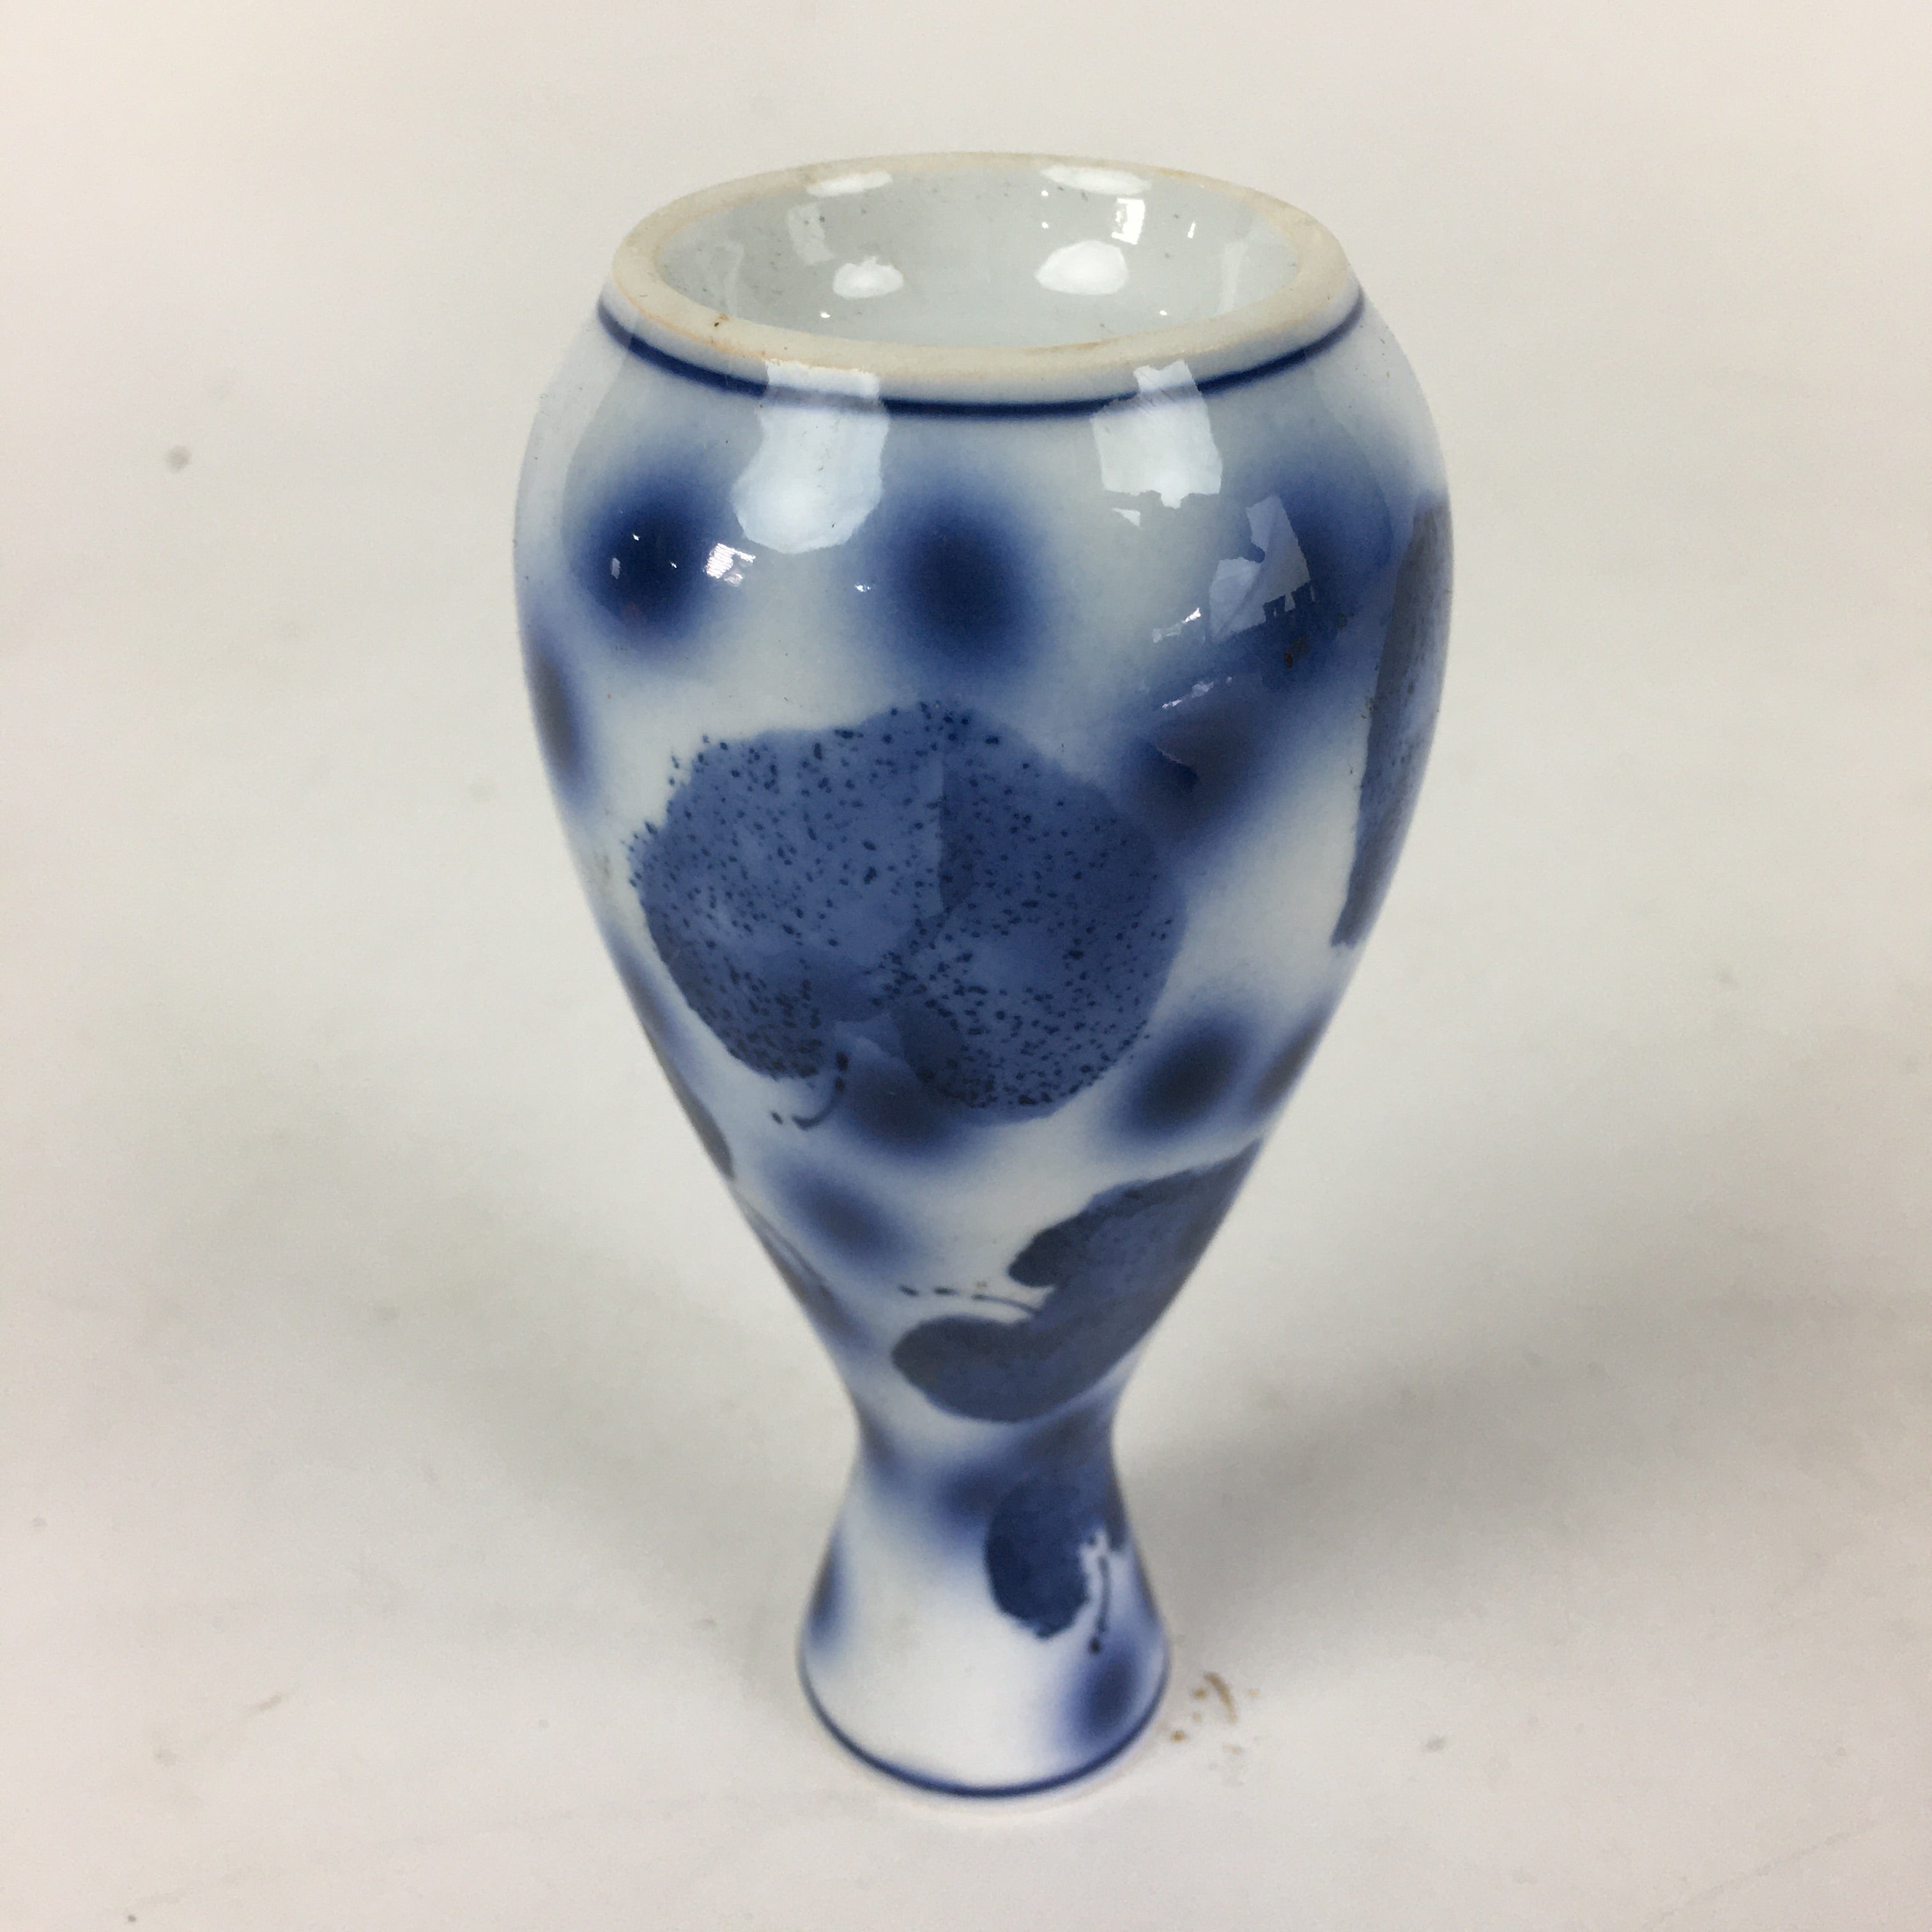 Japanese Porcelain Sake Bottle Vtg Blue Leaf Pattern Design Tokkuri TS379